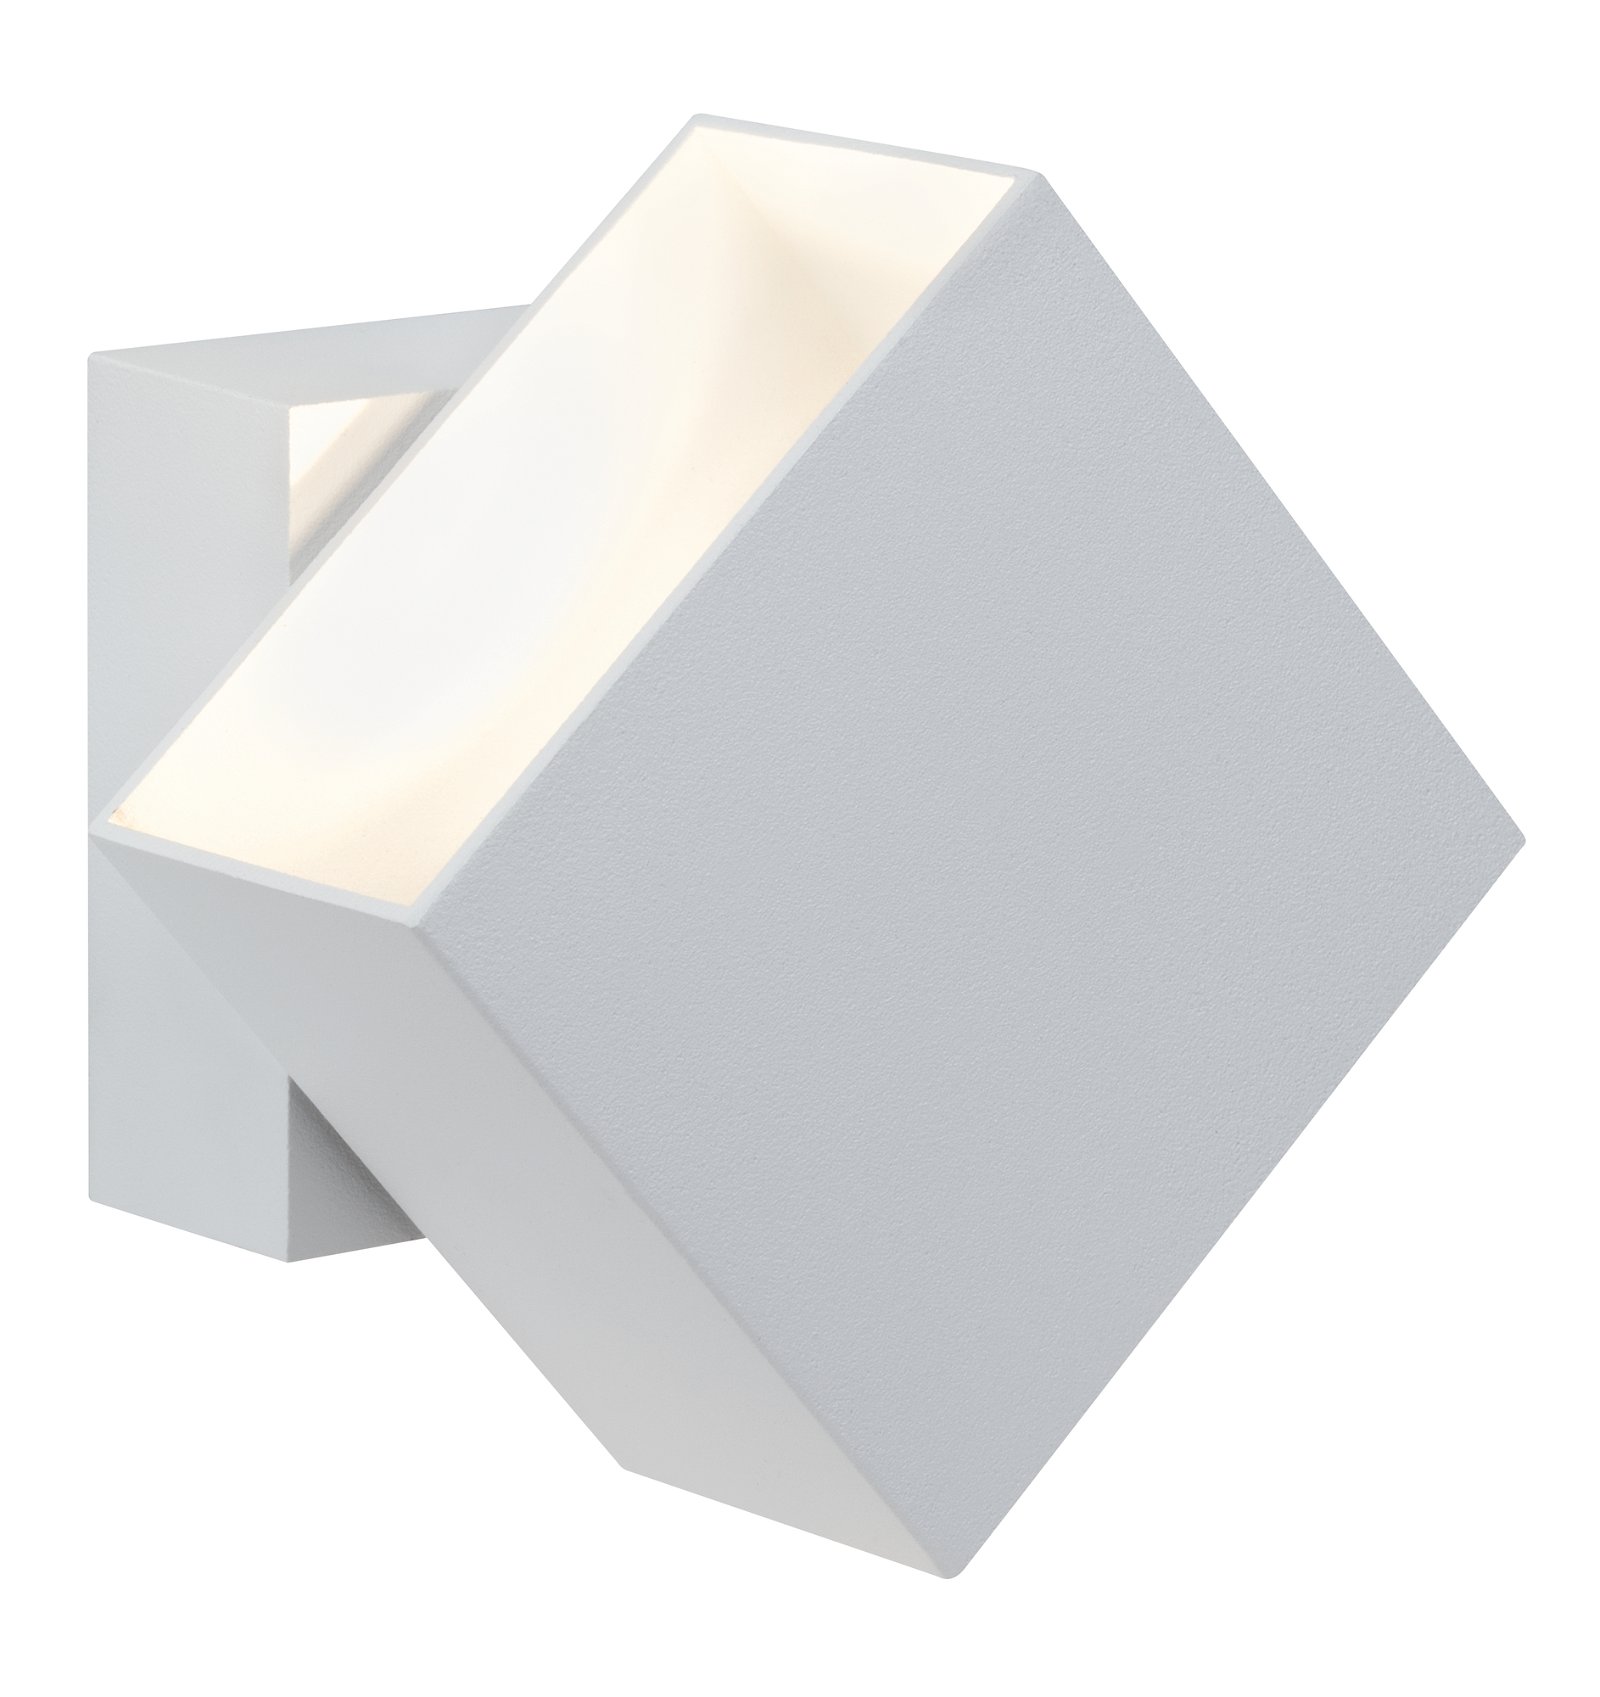 House LED Außenwandleuchte Cybo IP65 eckig 100x100mm 2700K 2x3,5W 355lm / 355lm 230V Weiß Aluminium